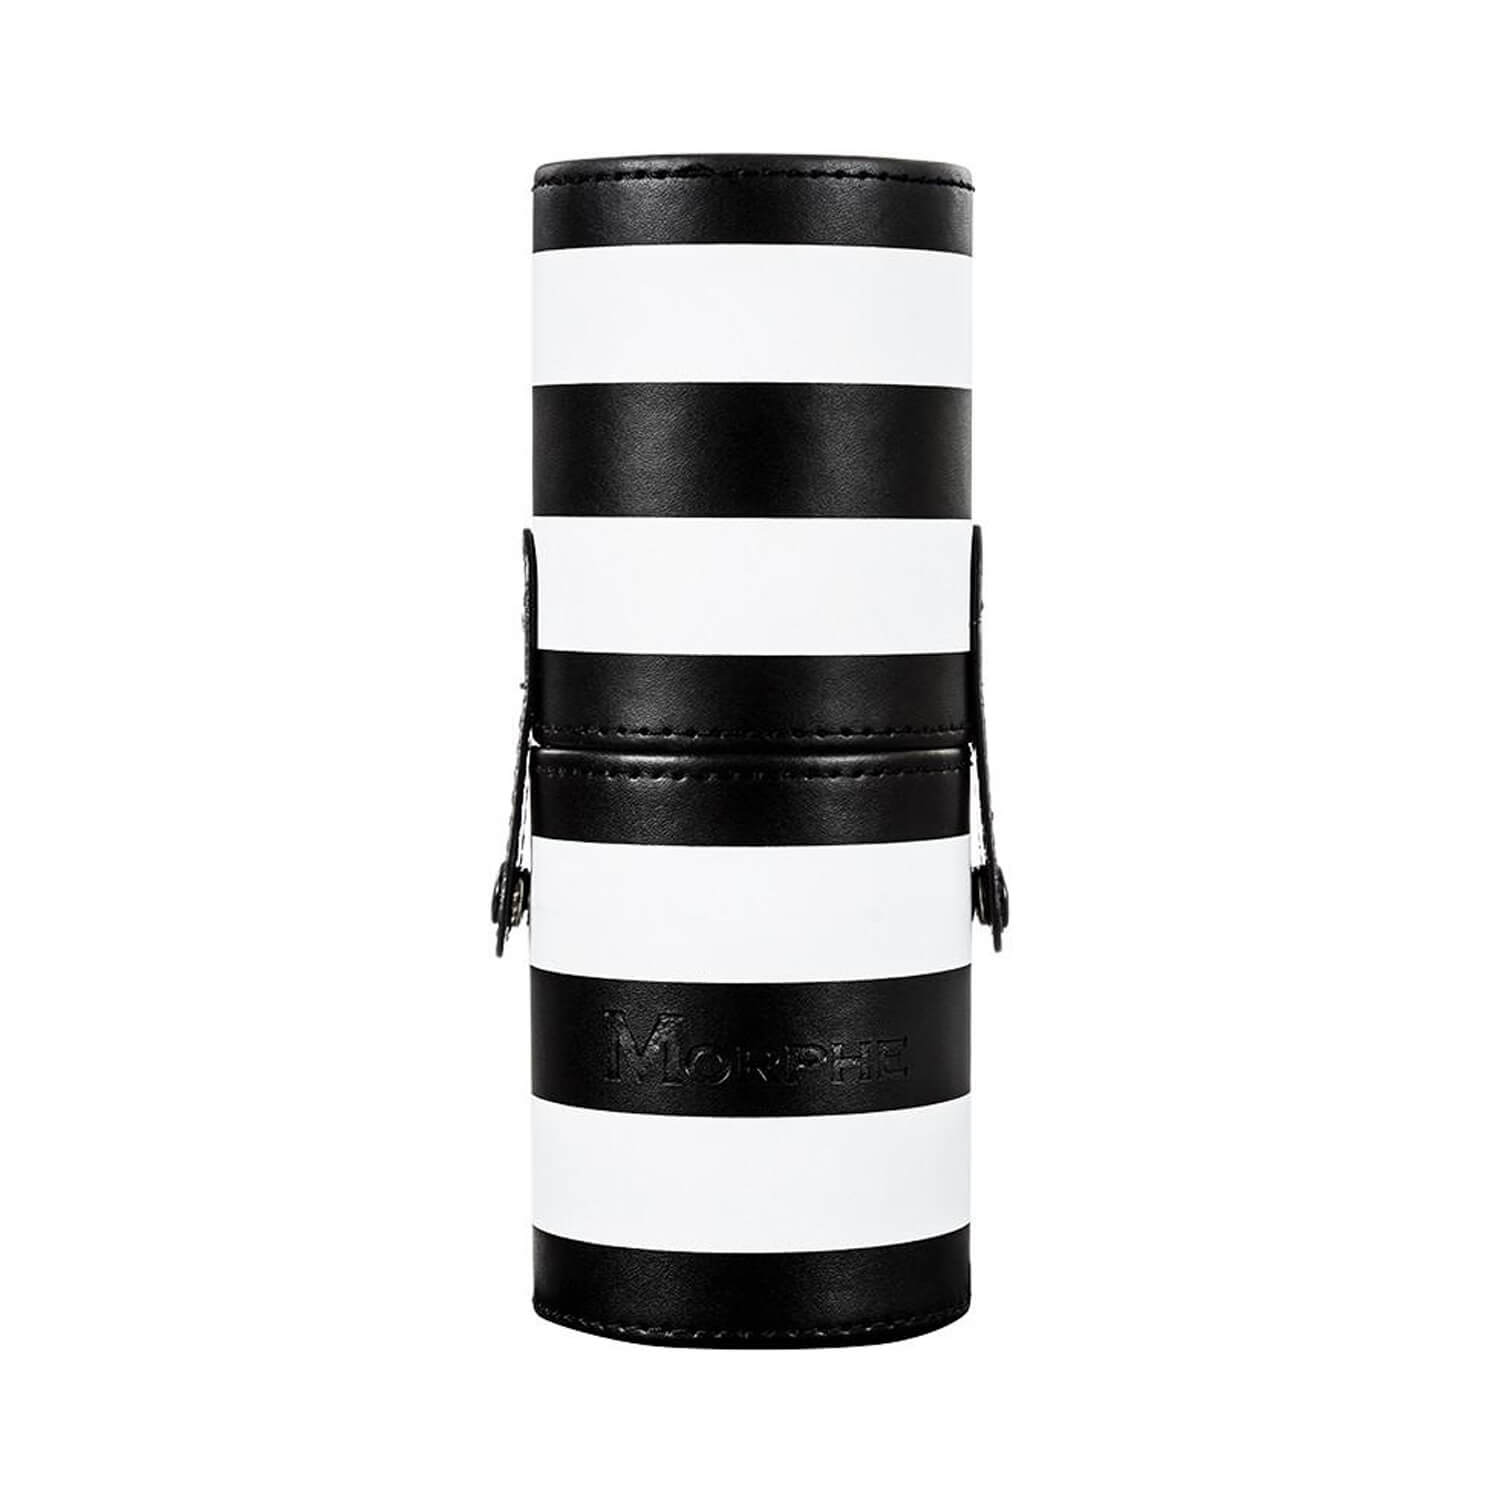 Morphe Cosmetics SET 706 12 Piece Black And White Travel Brush Set Cup Holder